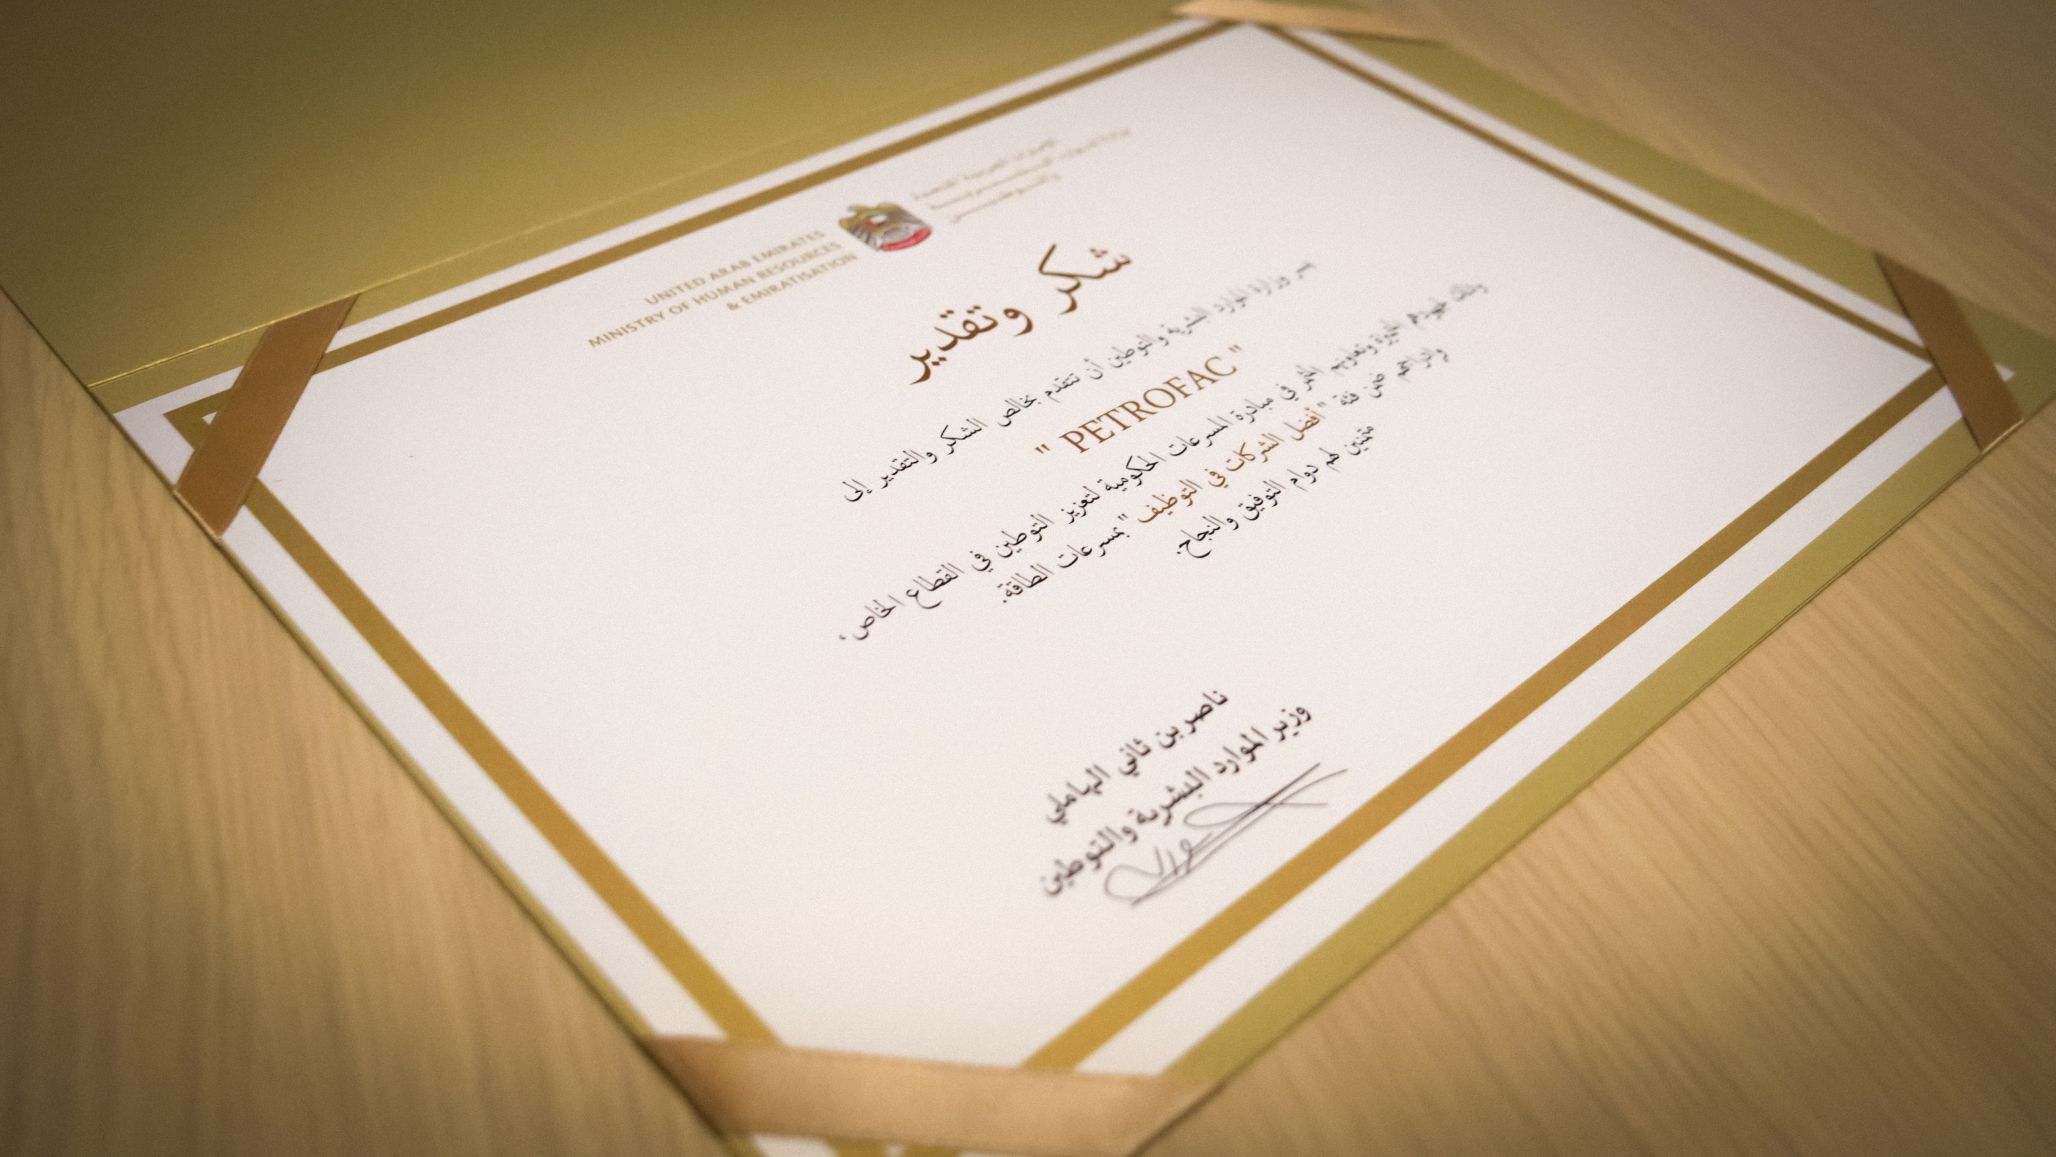 Petrofac Emiratisation diploma